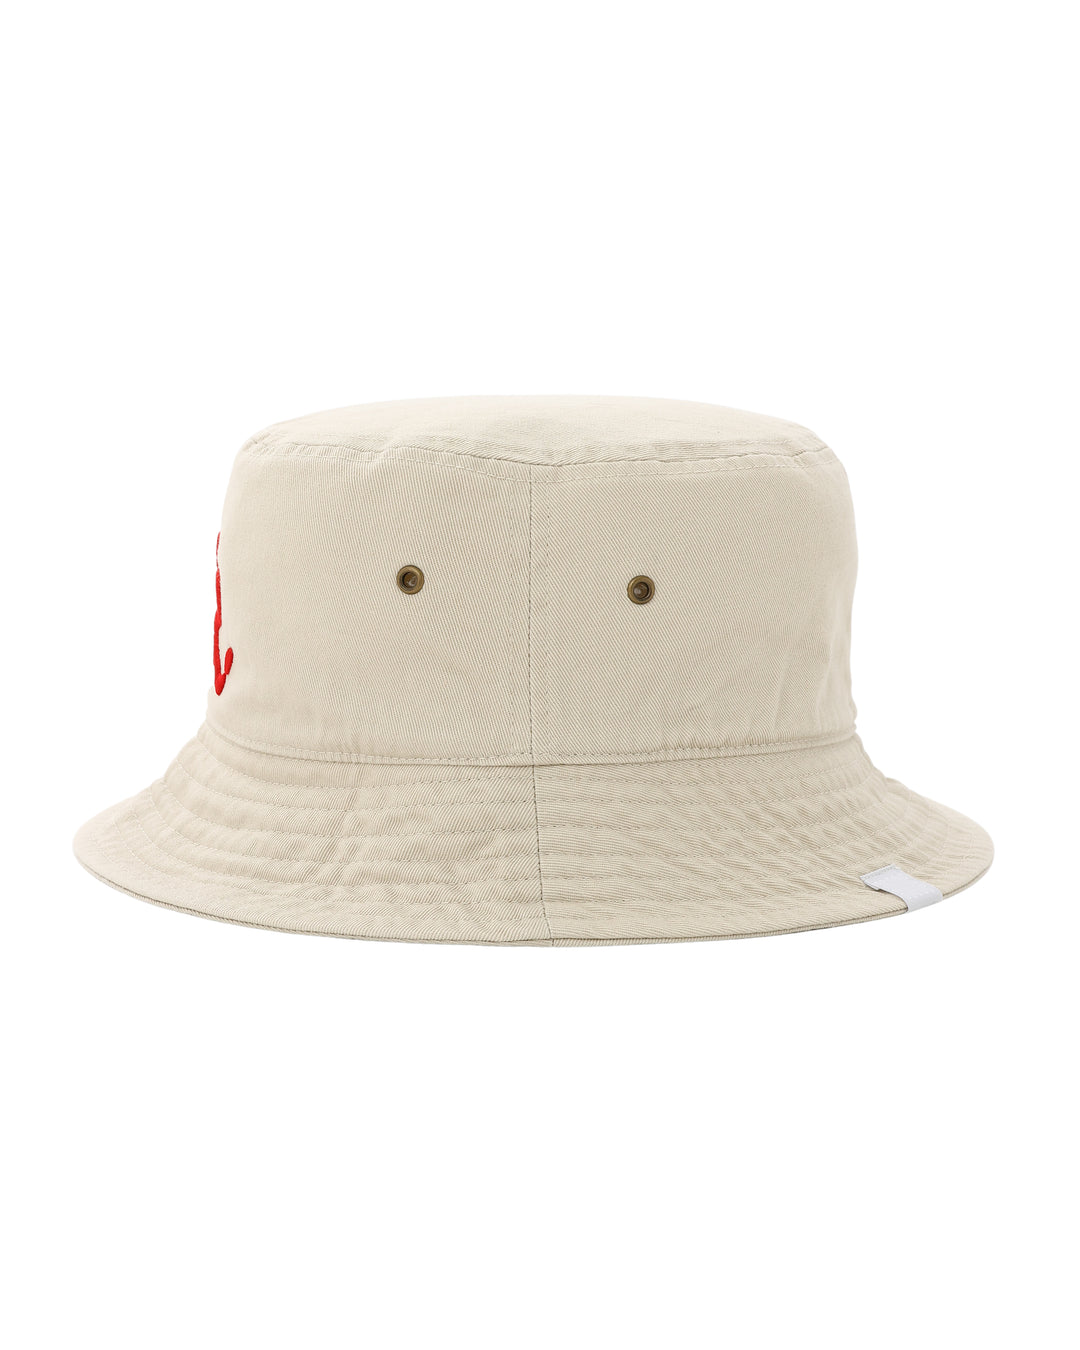 Bucket Hat “LA Ketchup” / Putty